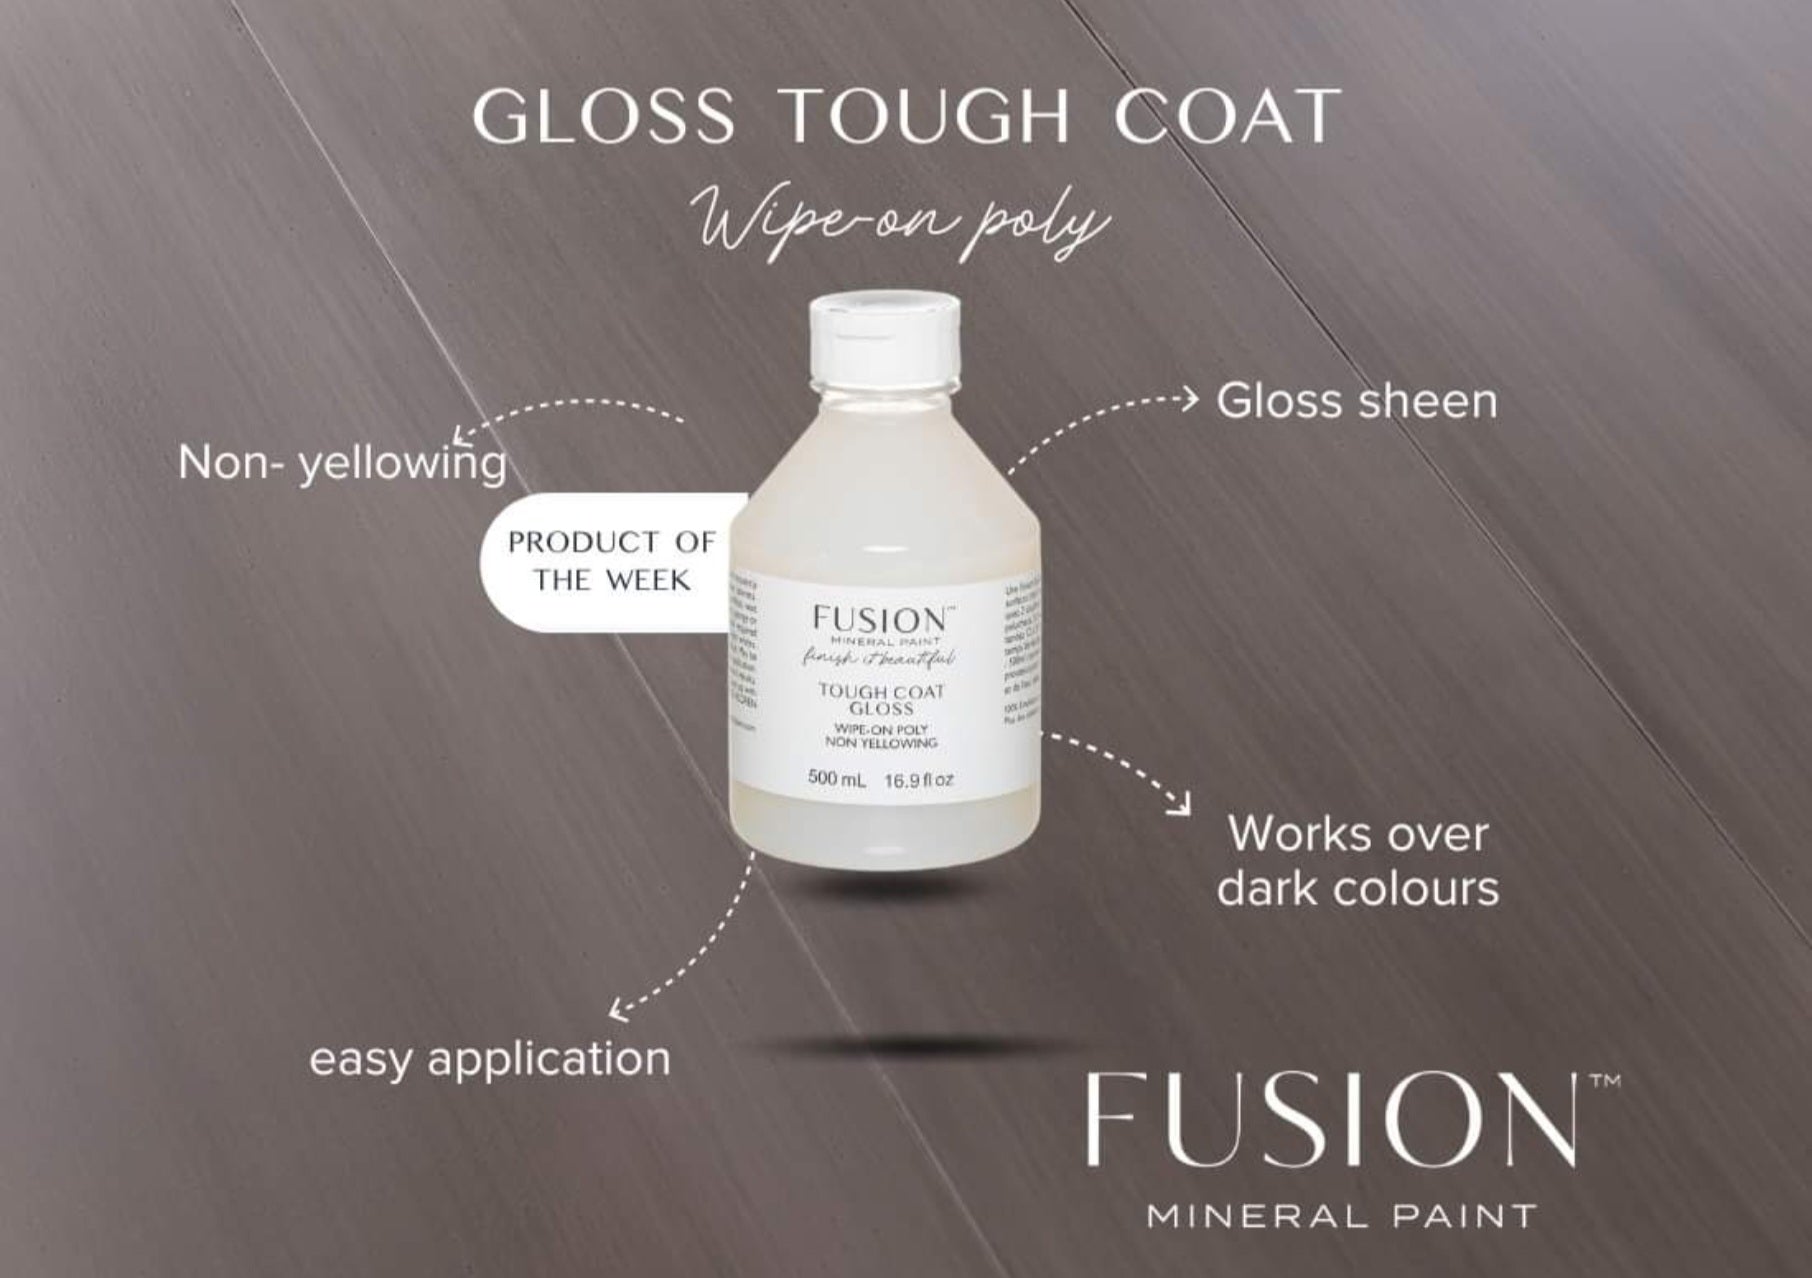 Fusion Mineral Paint Gloss Tough Coat Characteristics